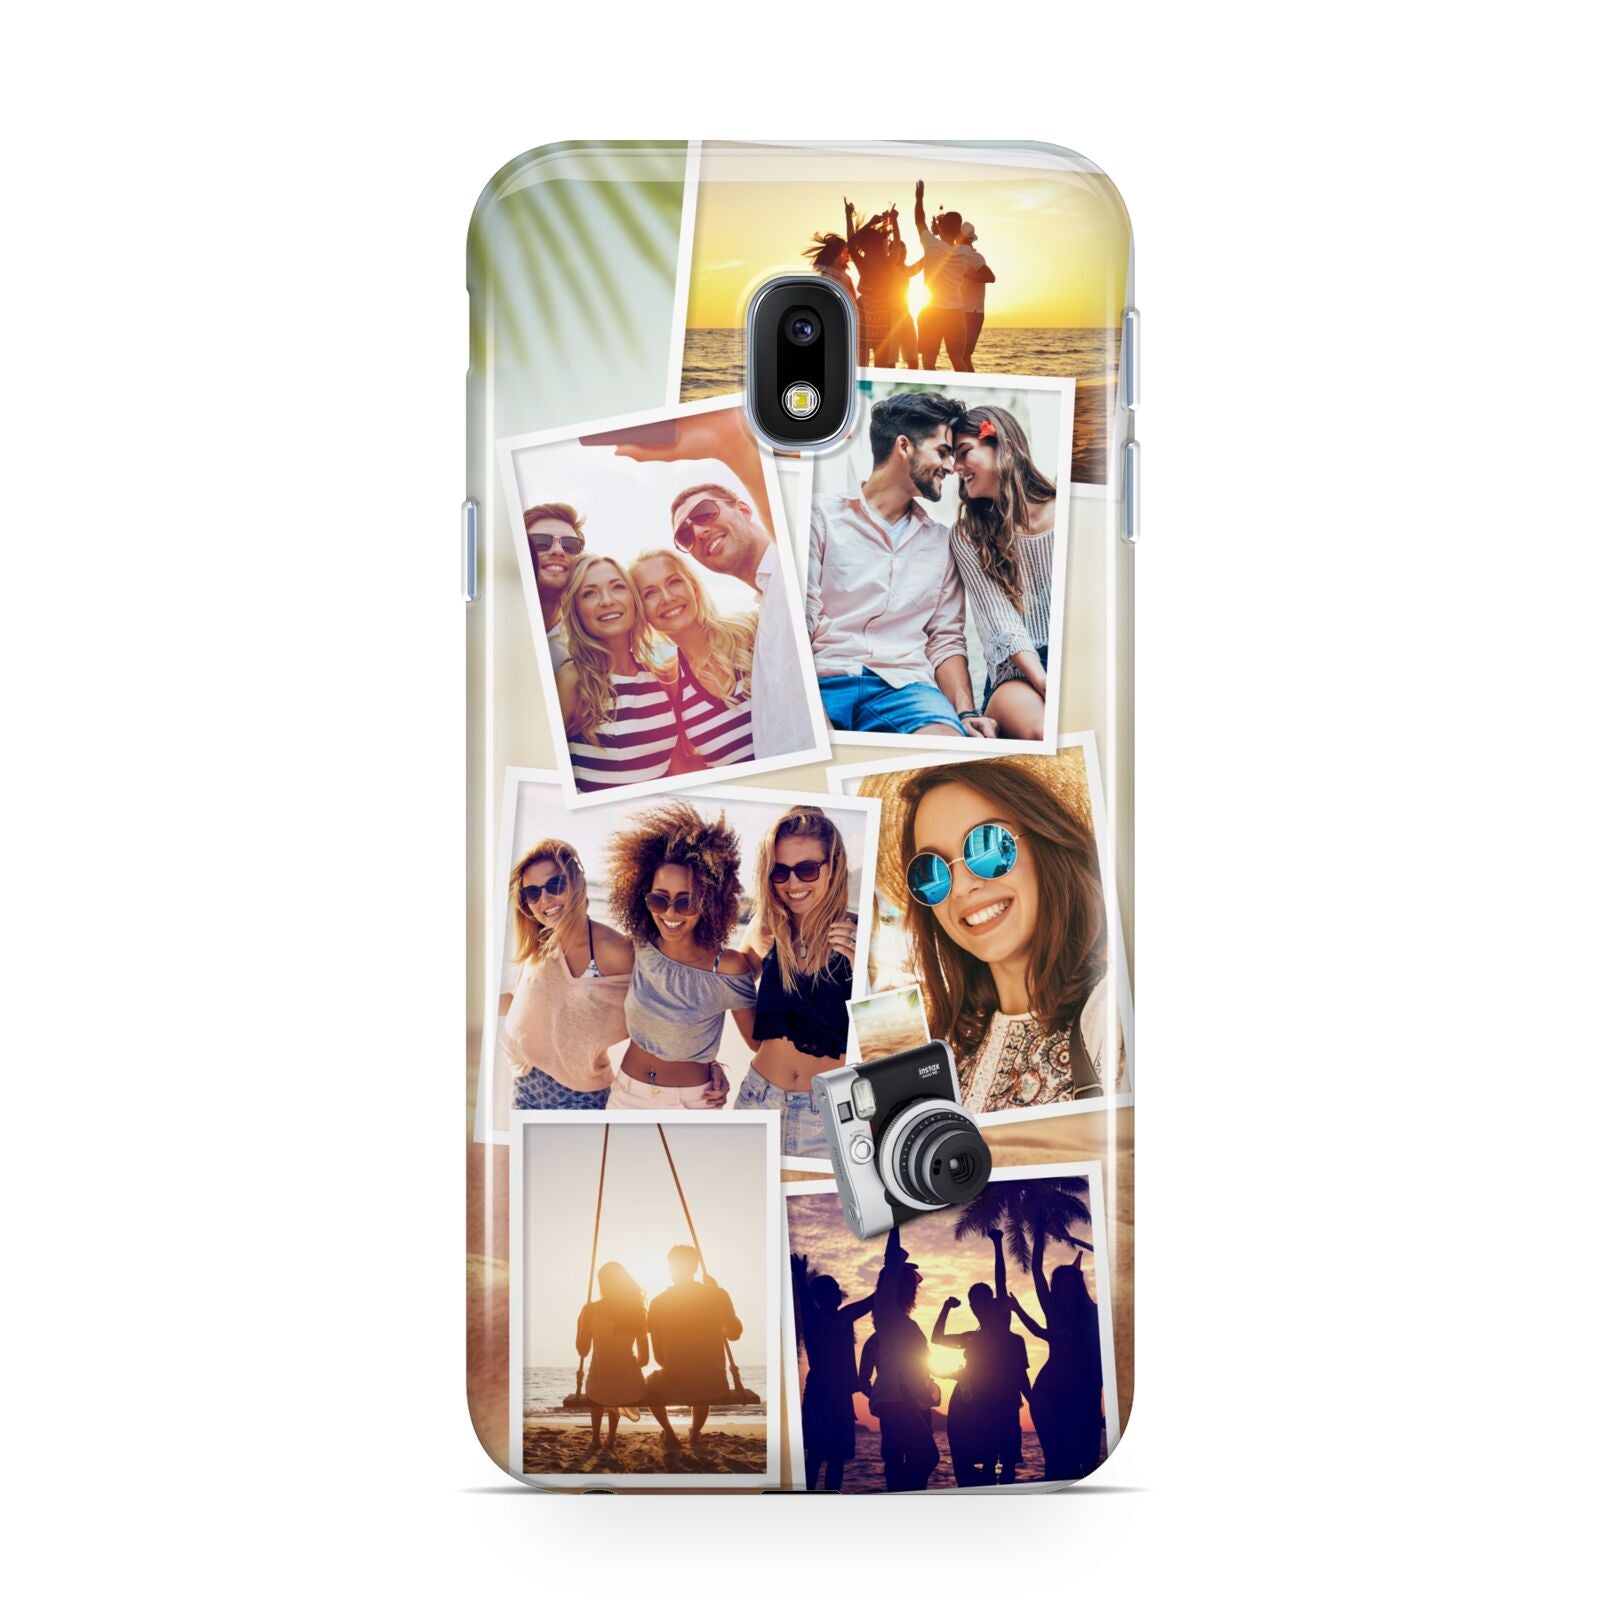 Personalised Summer Holiday Photos Samsung Galaxy J3 2017 Case